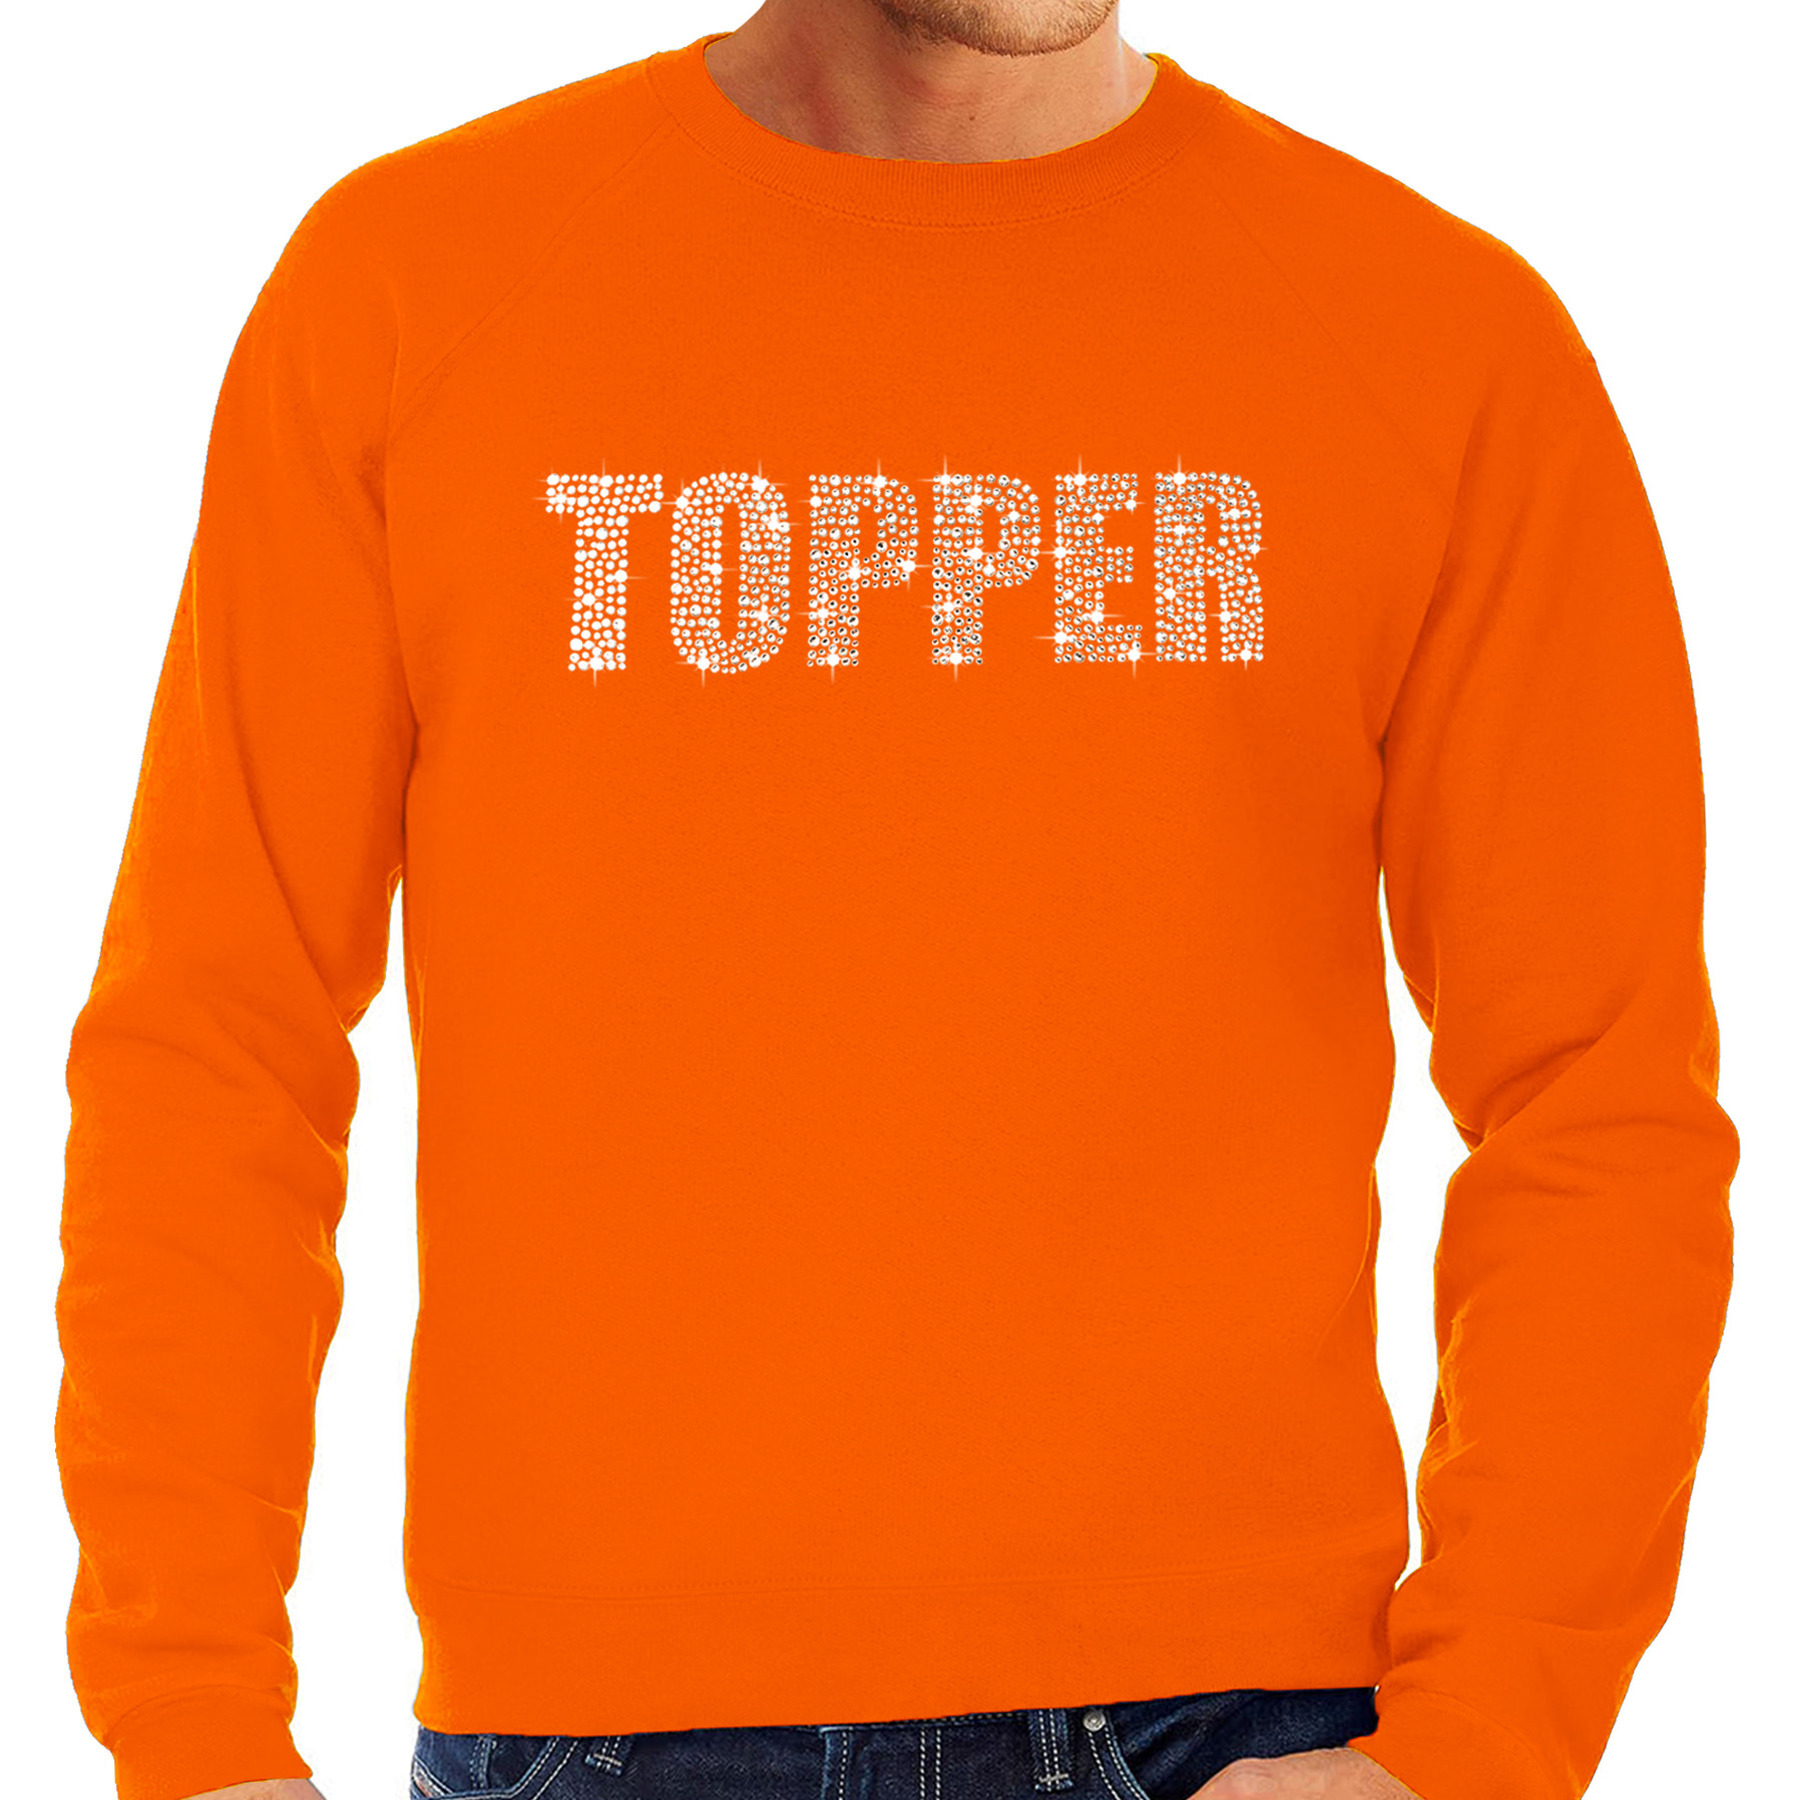 Glitter foute trui oranje Topper rhinestones steentjes voor heren - Glitter sweater/ outfit